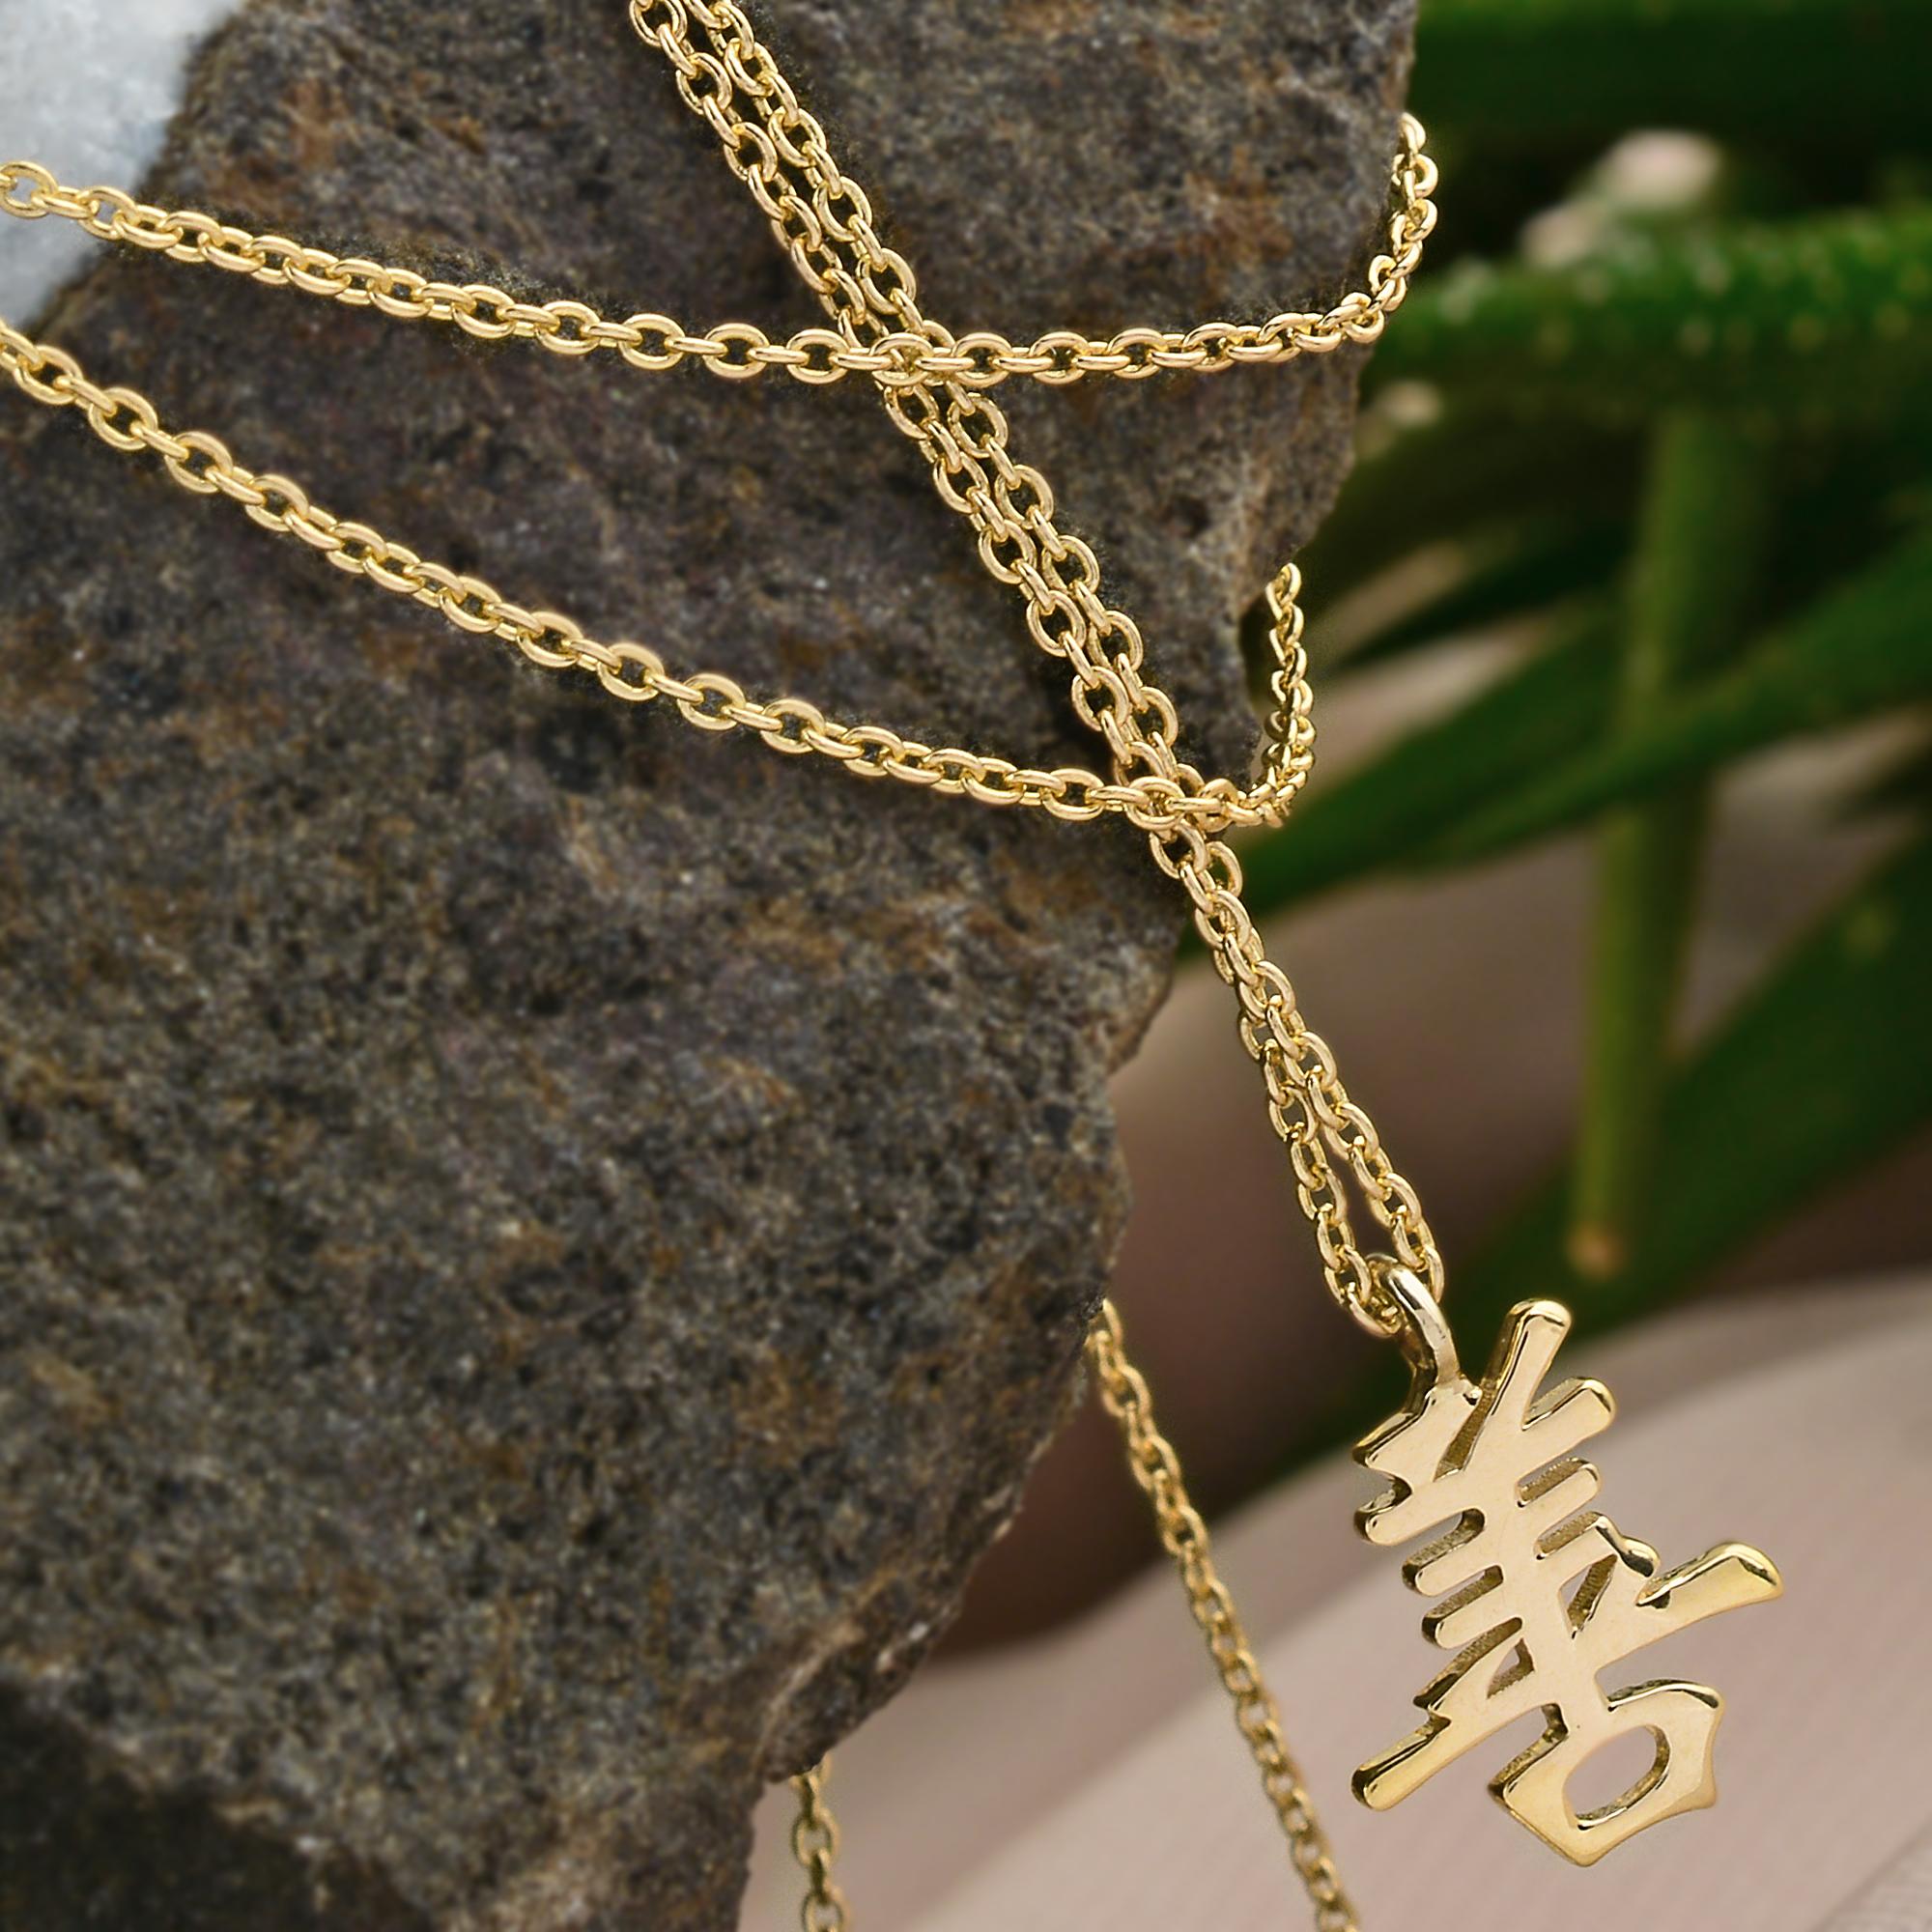 gold jewelry symbols